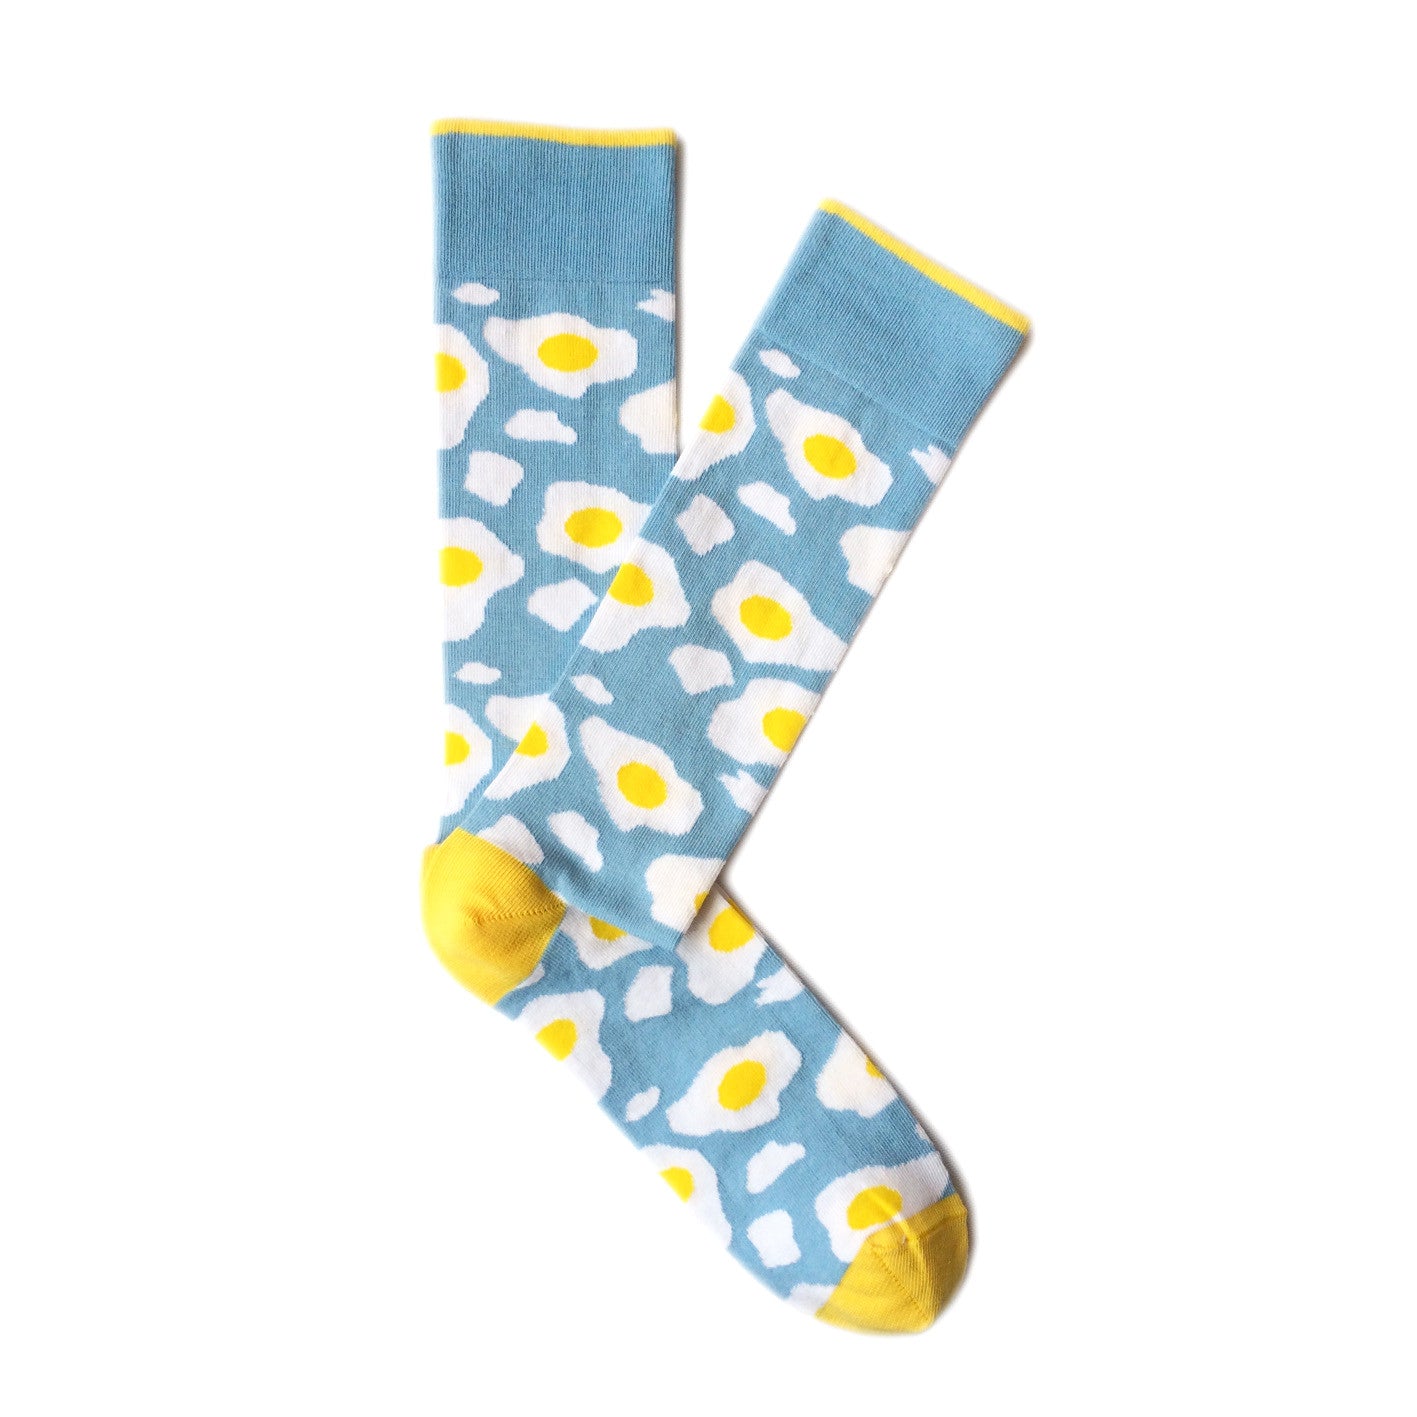 Giraffecool-Giraffe-Cool-Blue-Yellow-White-Clouds-And-Eggs-Brushed-Cotton-Fashion-Socks-Pair-Open